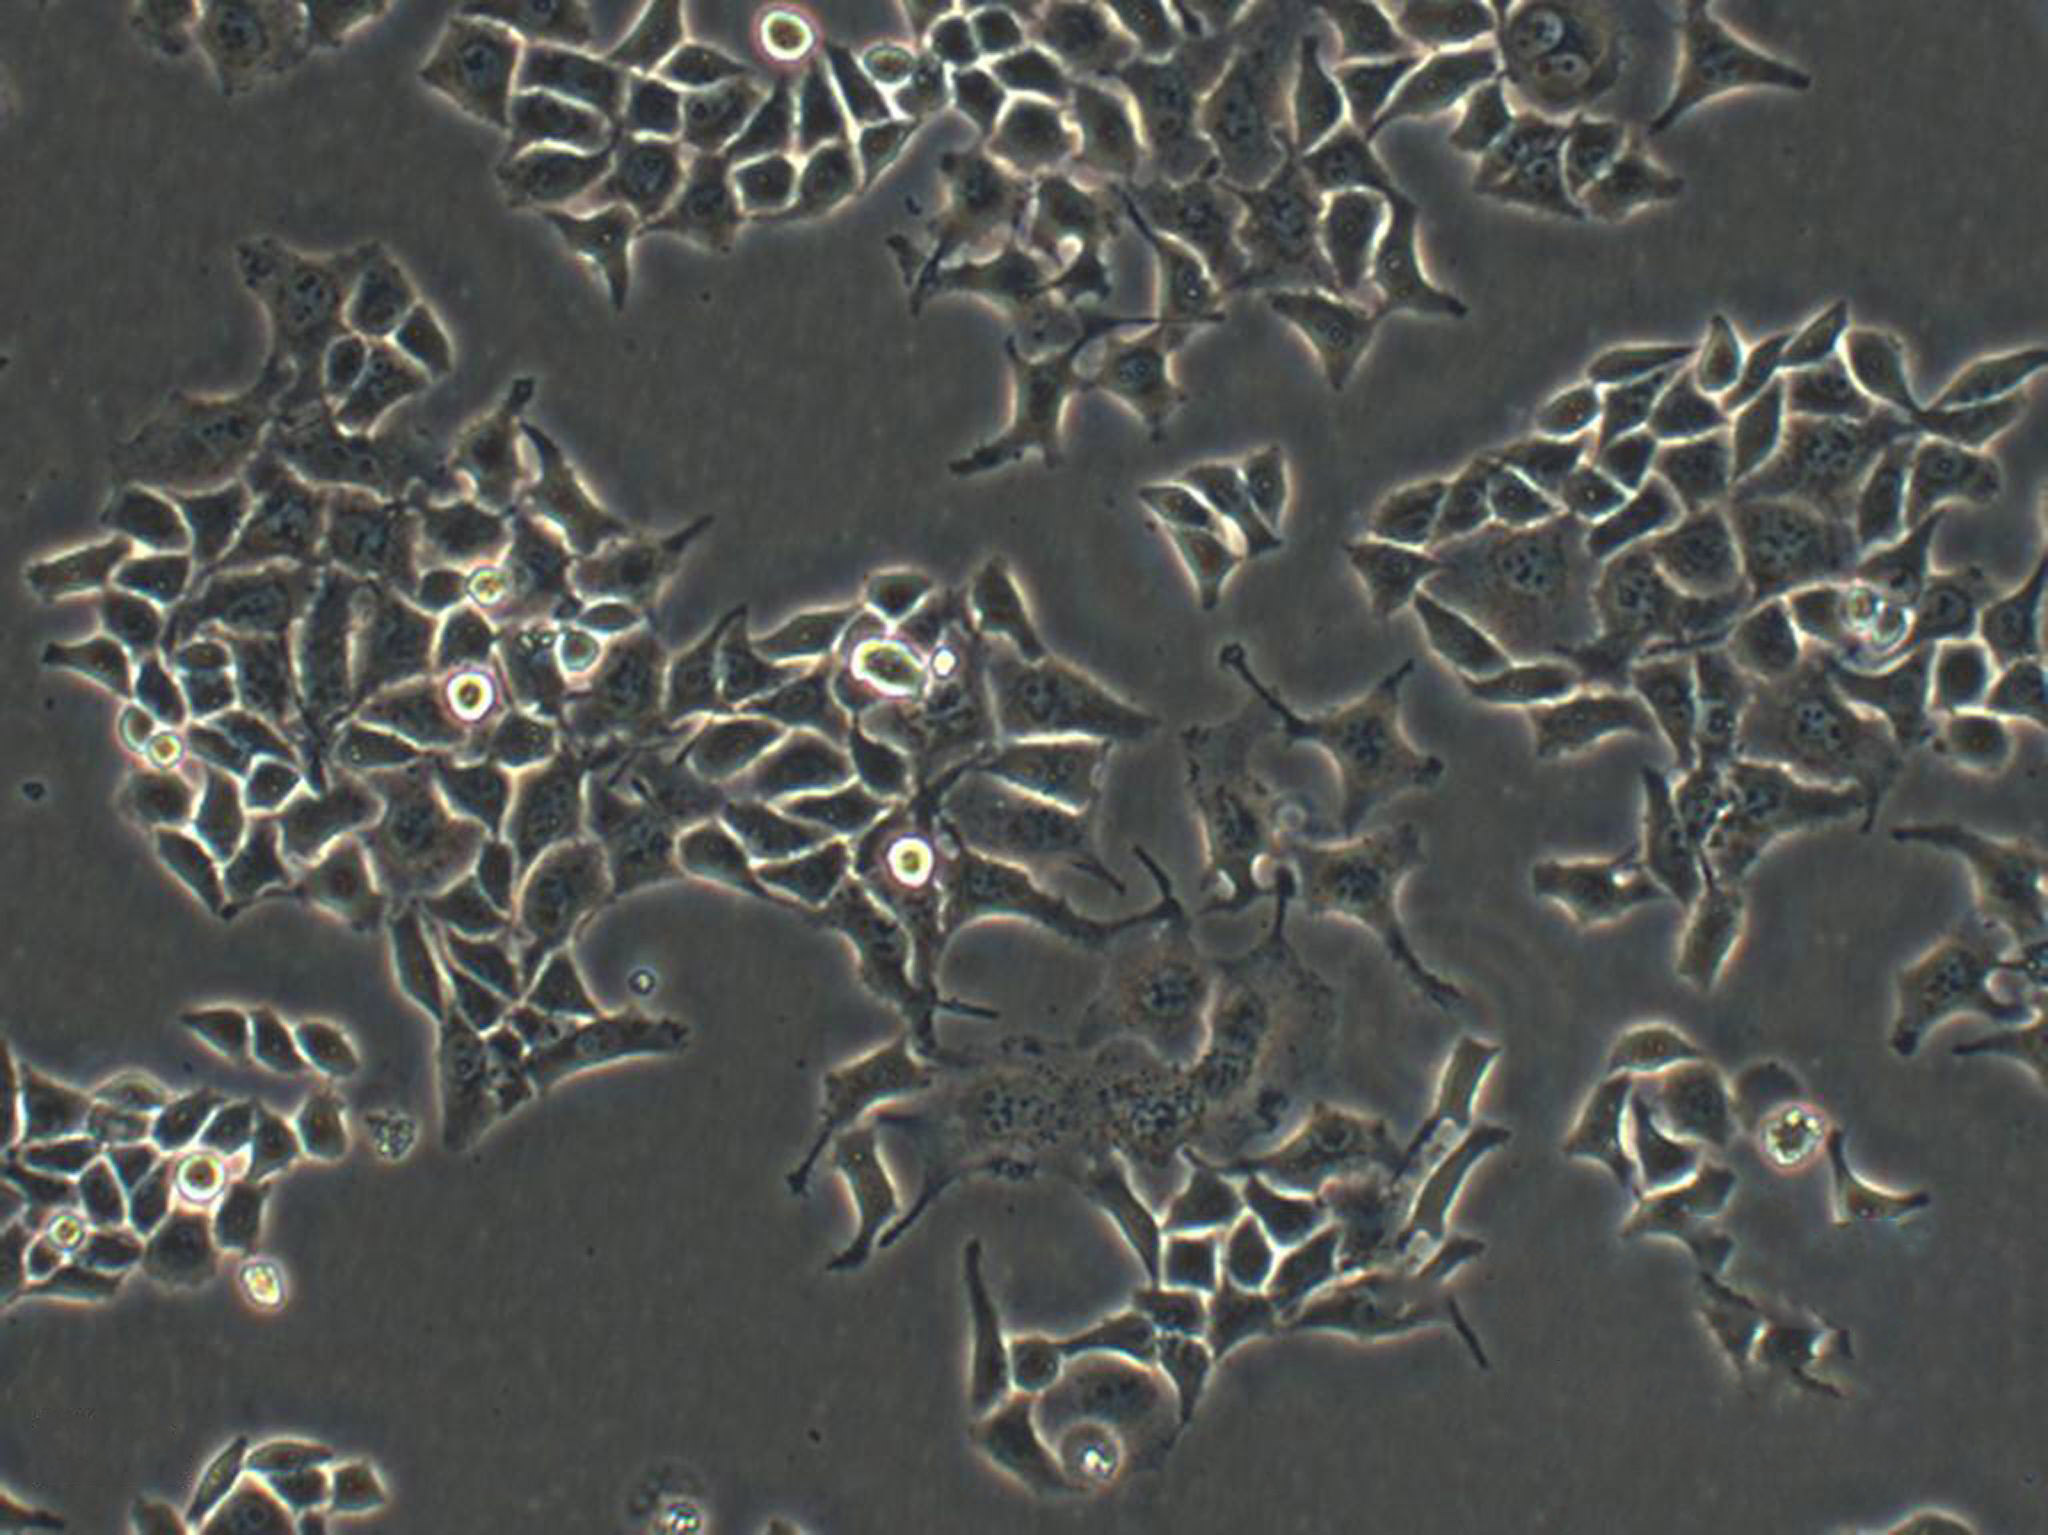 PNT1A epithelioid cells人前列腺癌细胞系